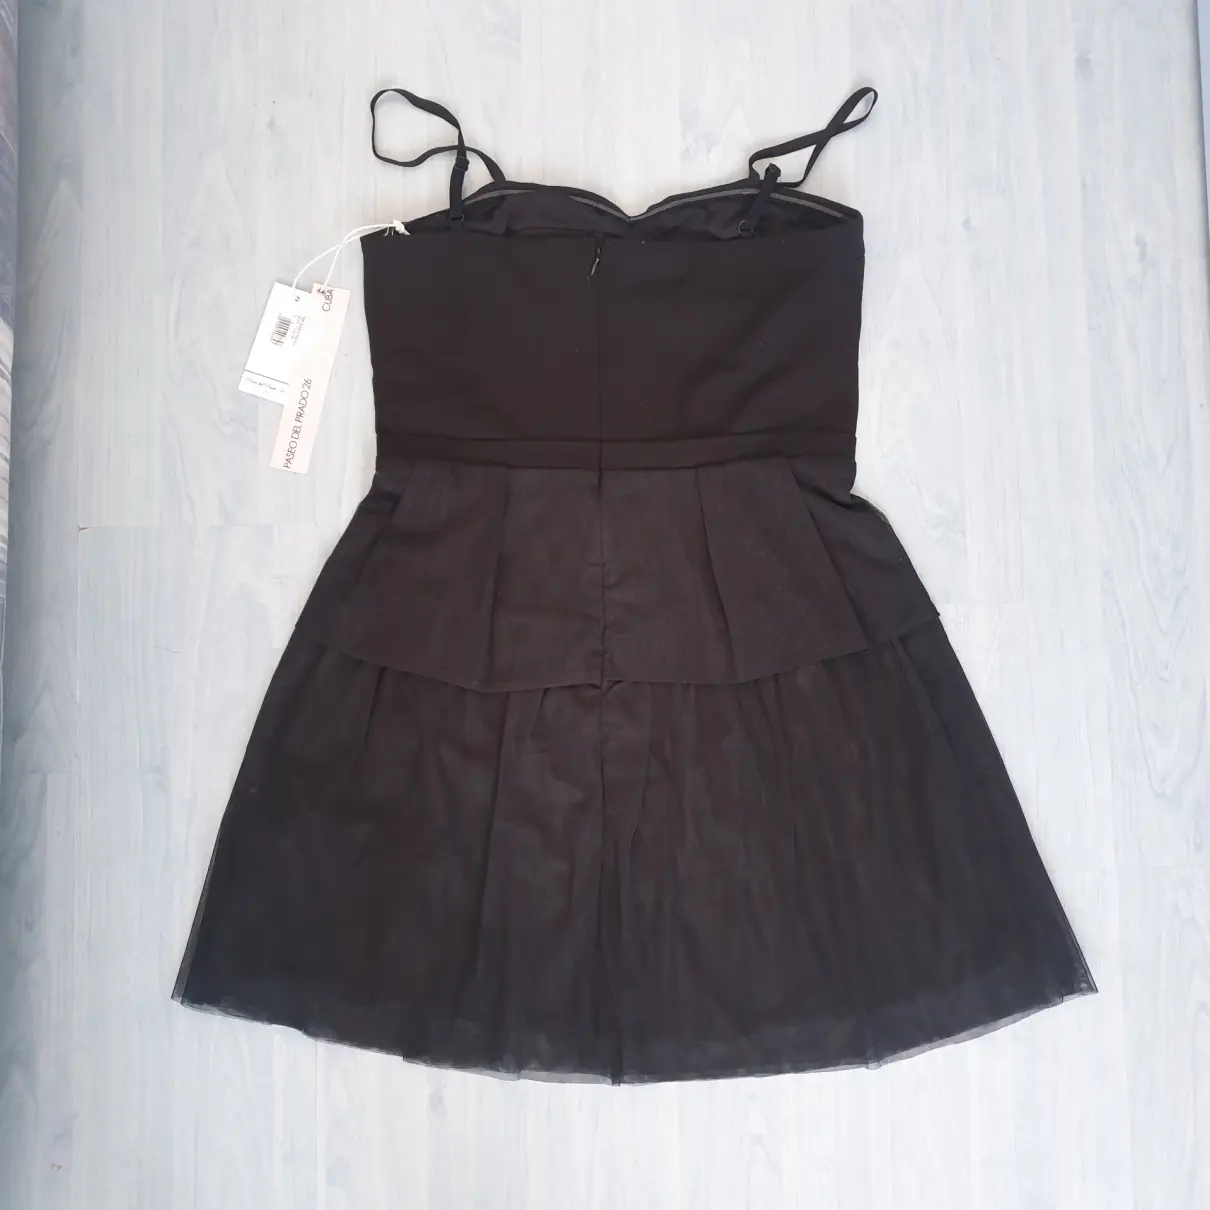 Buy Silvian Heach Mini dress online